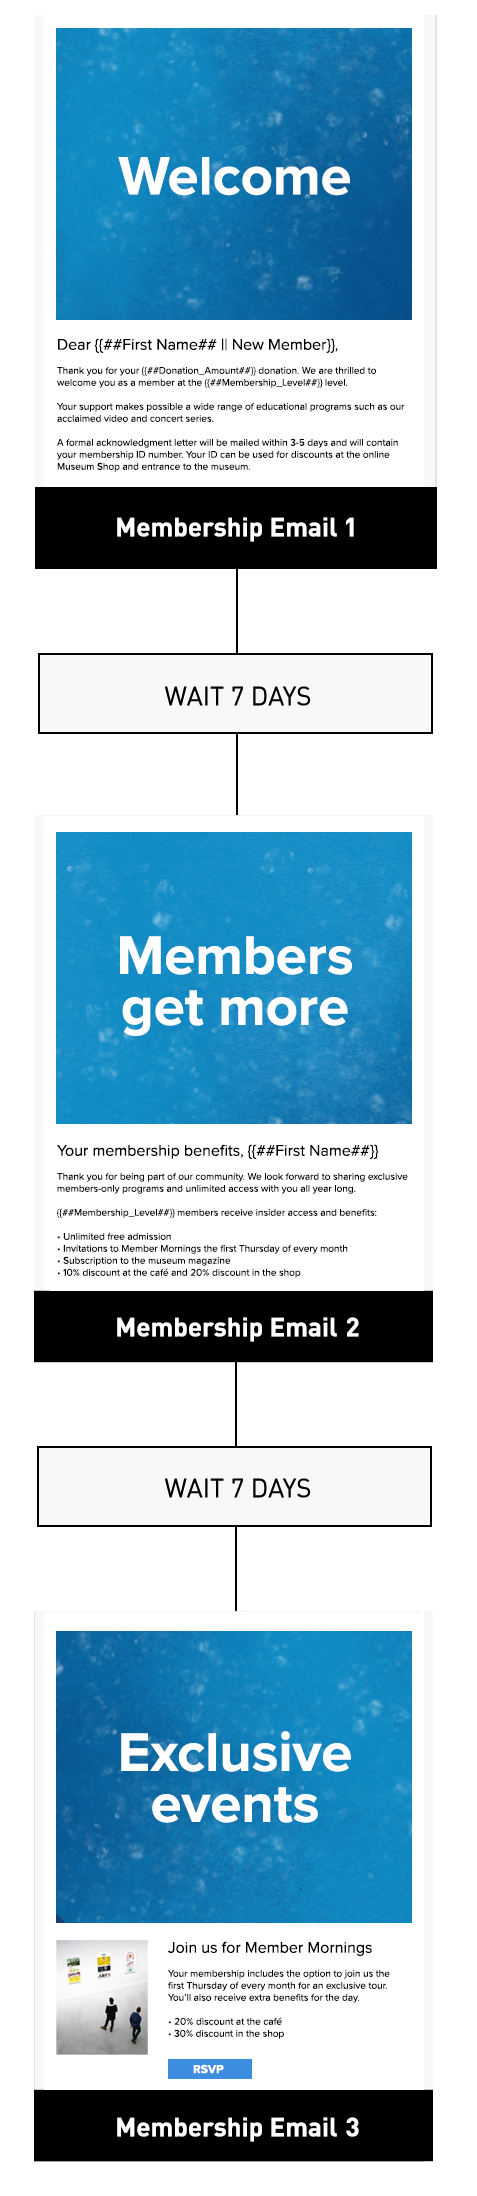 workflow-membership-alt.png